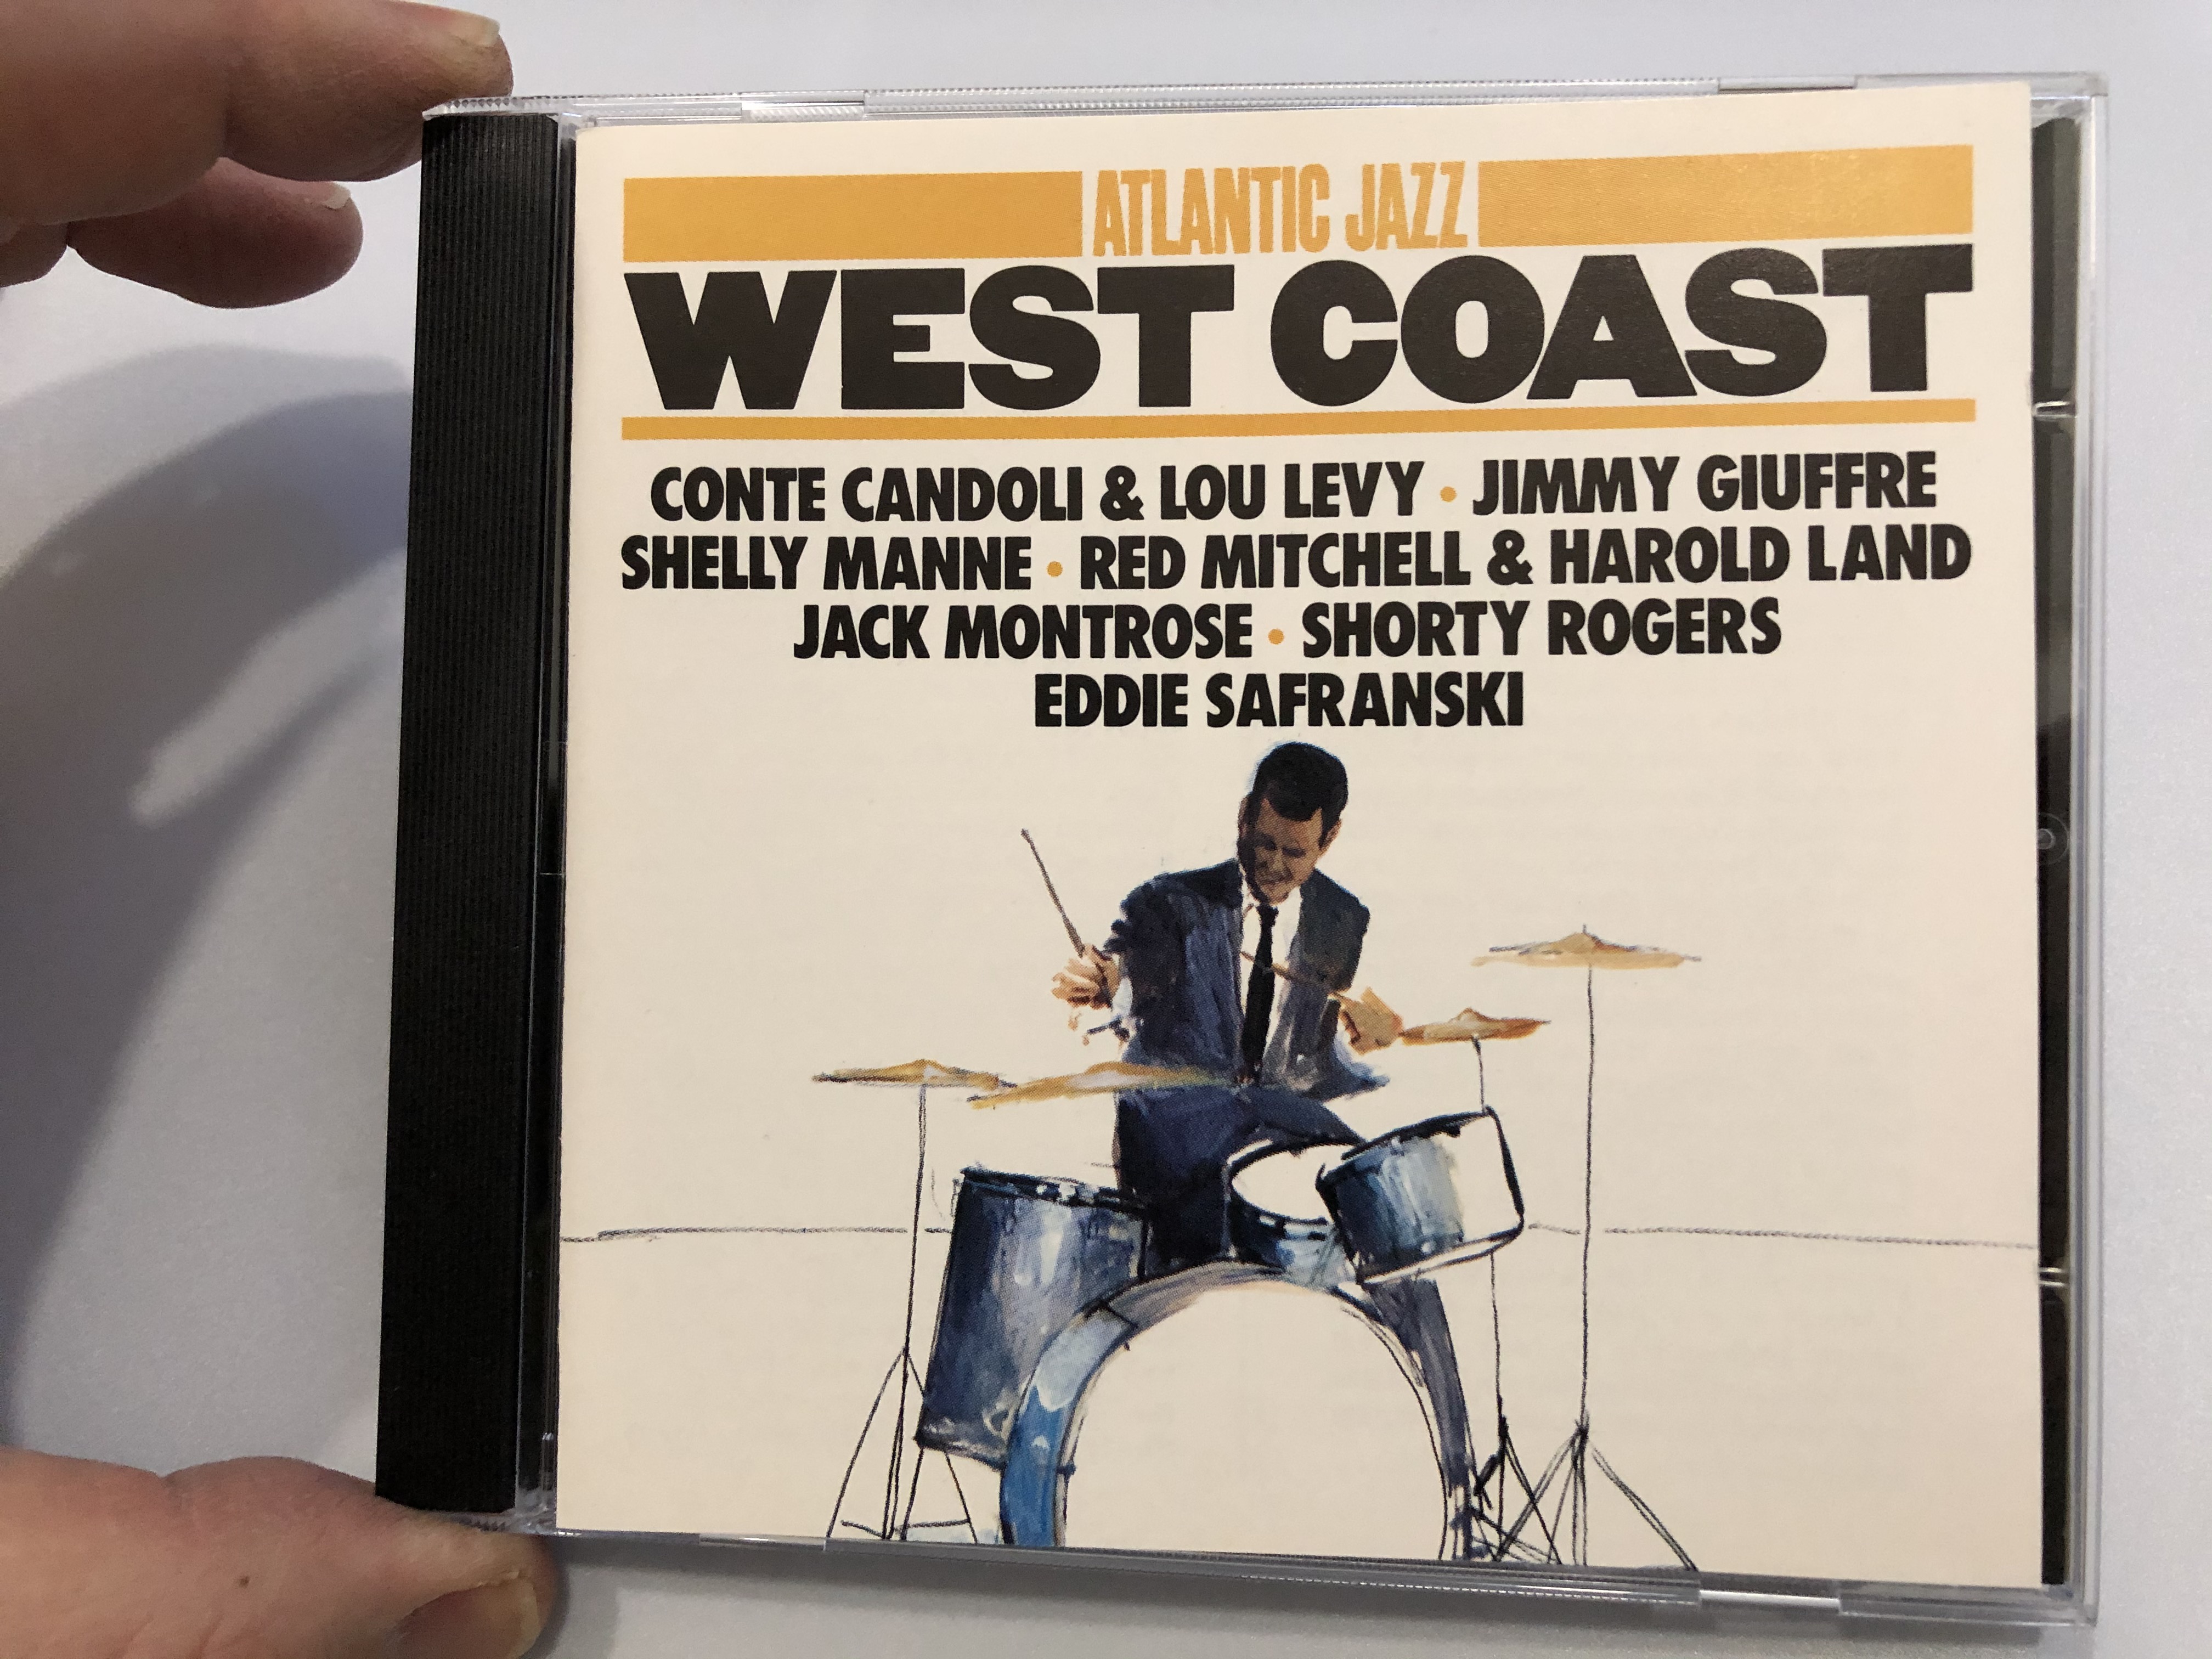 atlantic-jazz-west-coast-conte-candoli-lou-levy-jimmy-giuffre-shelly-manne-red-mitchell-harold-land-jack-montrose-shorty-rogers-eddie-safranski-atlantic-audio-cd-1986-781-703-2-1-.jpg